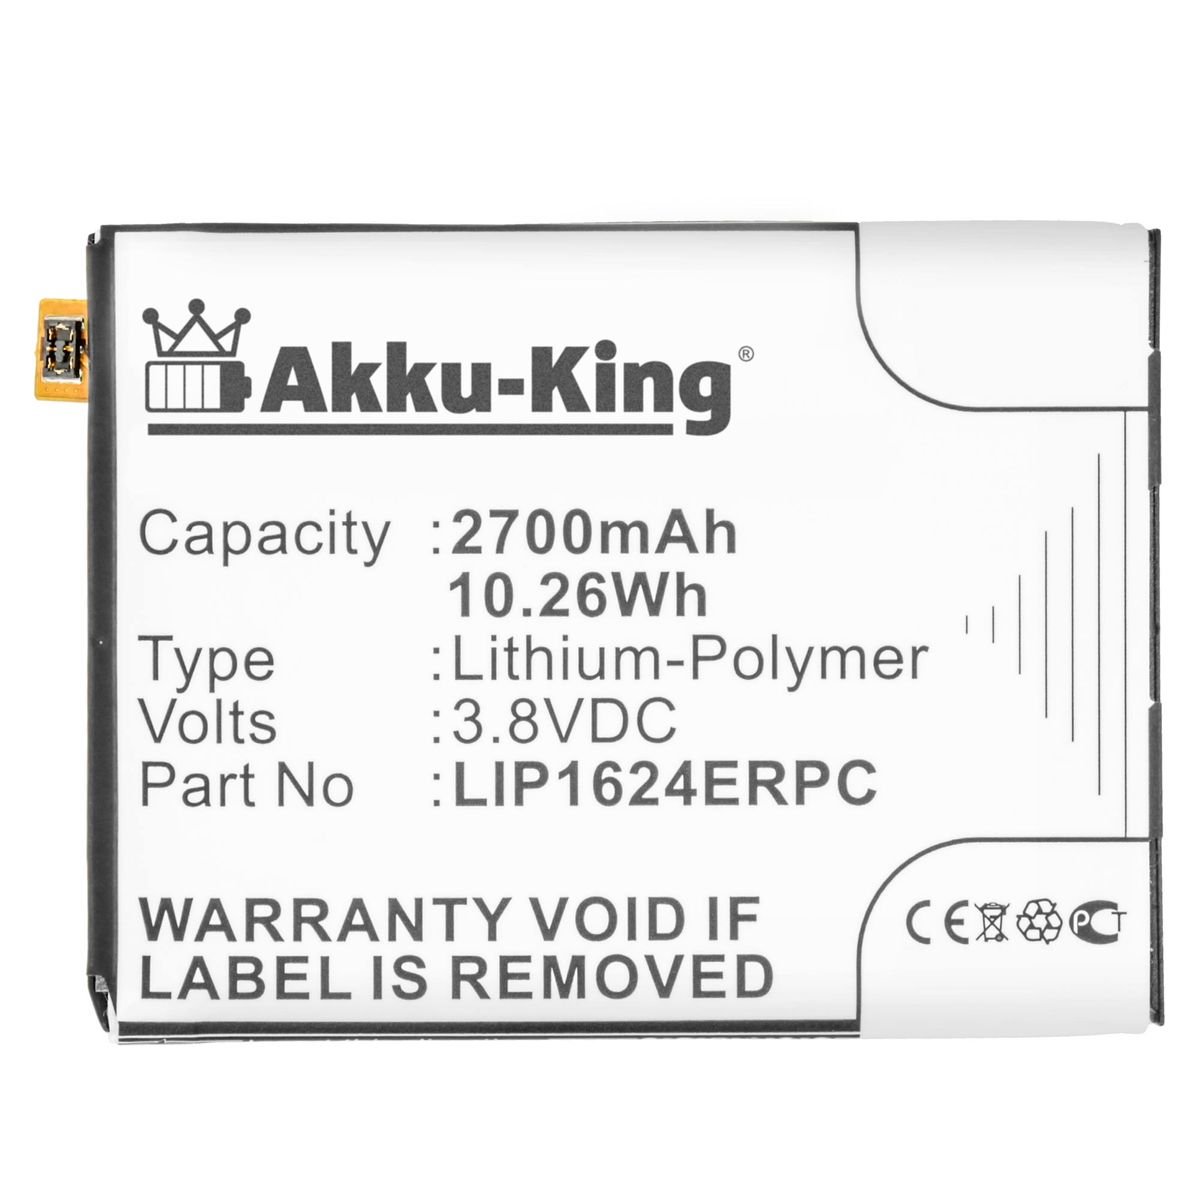 AKKU-KING Akku kompatibel Handy-Akku, 2700mAh mit LIP1624ERPC Sony Li-Polymer Volt, 3.8